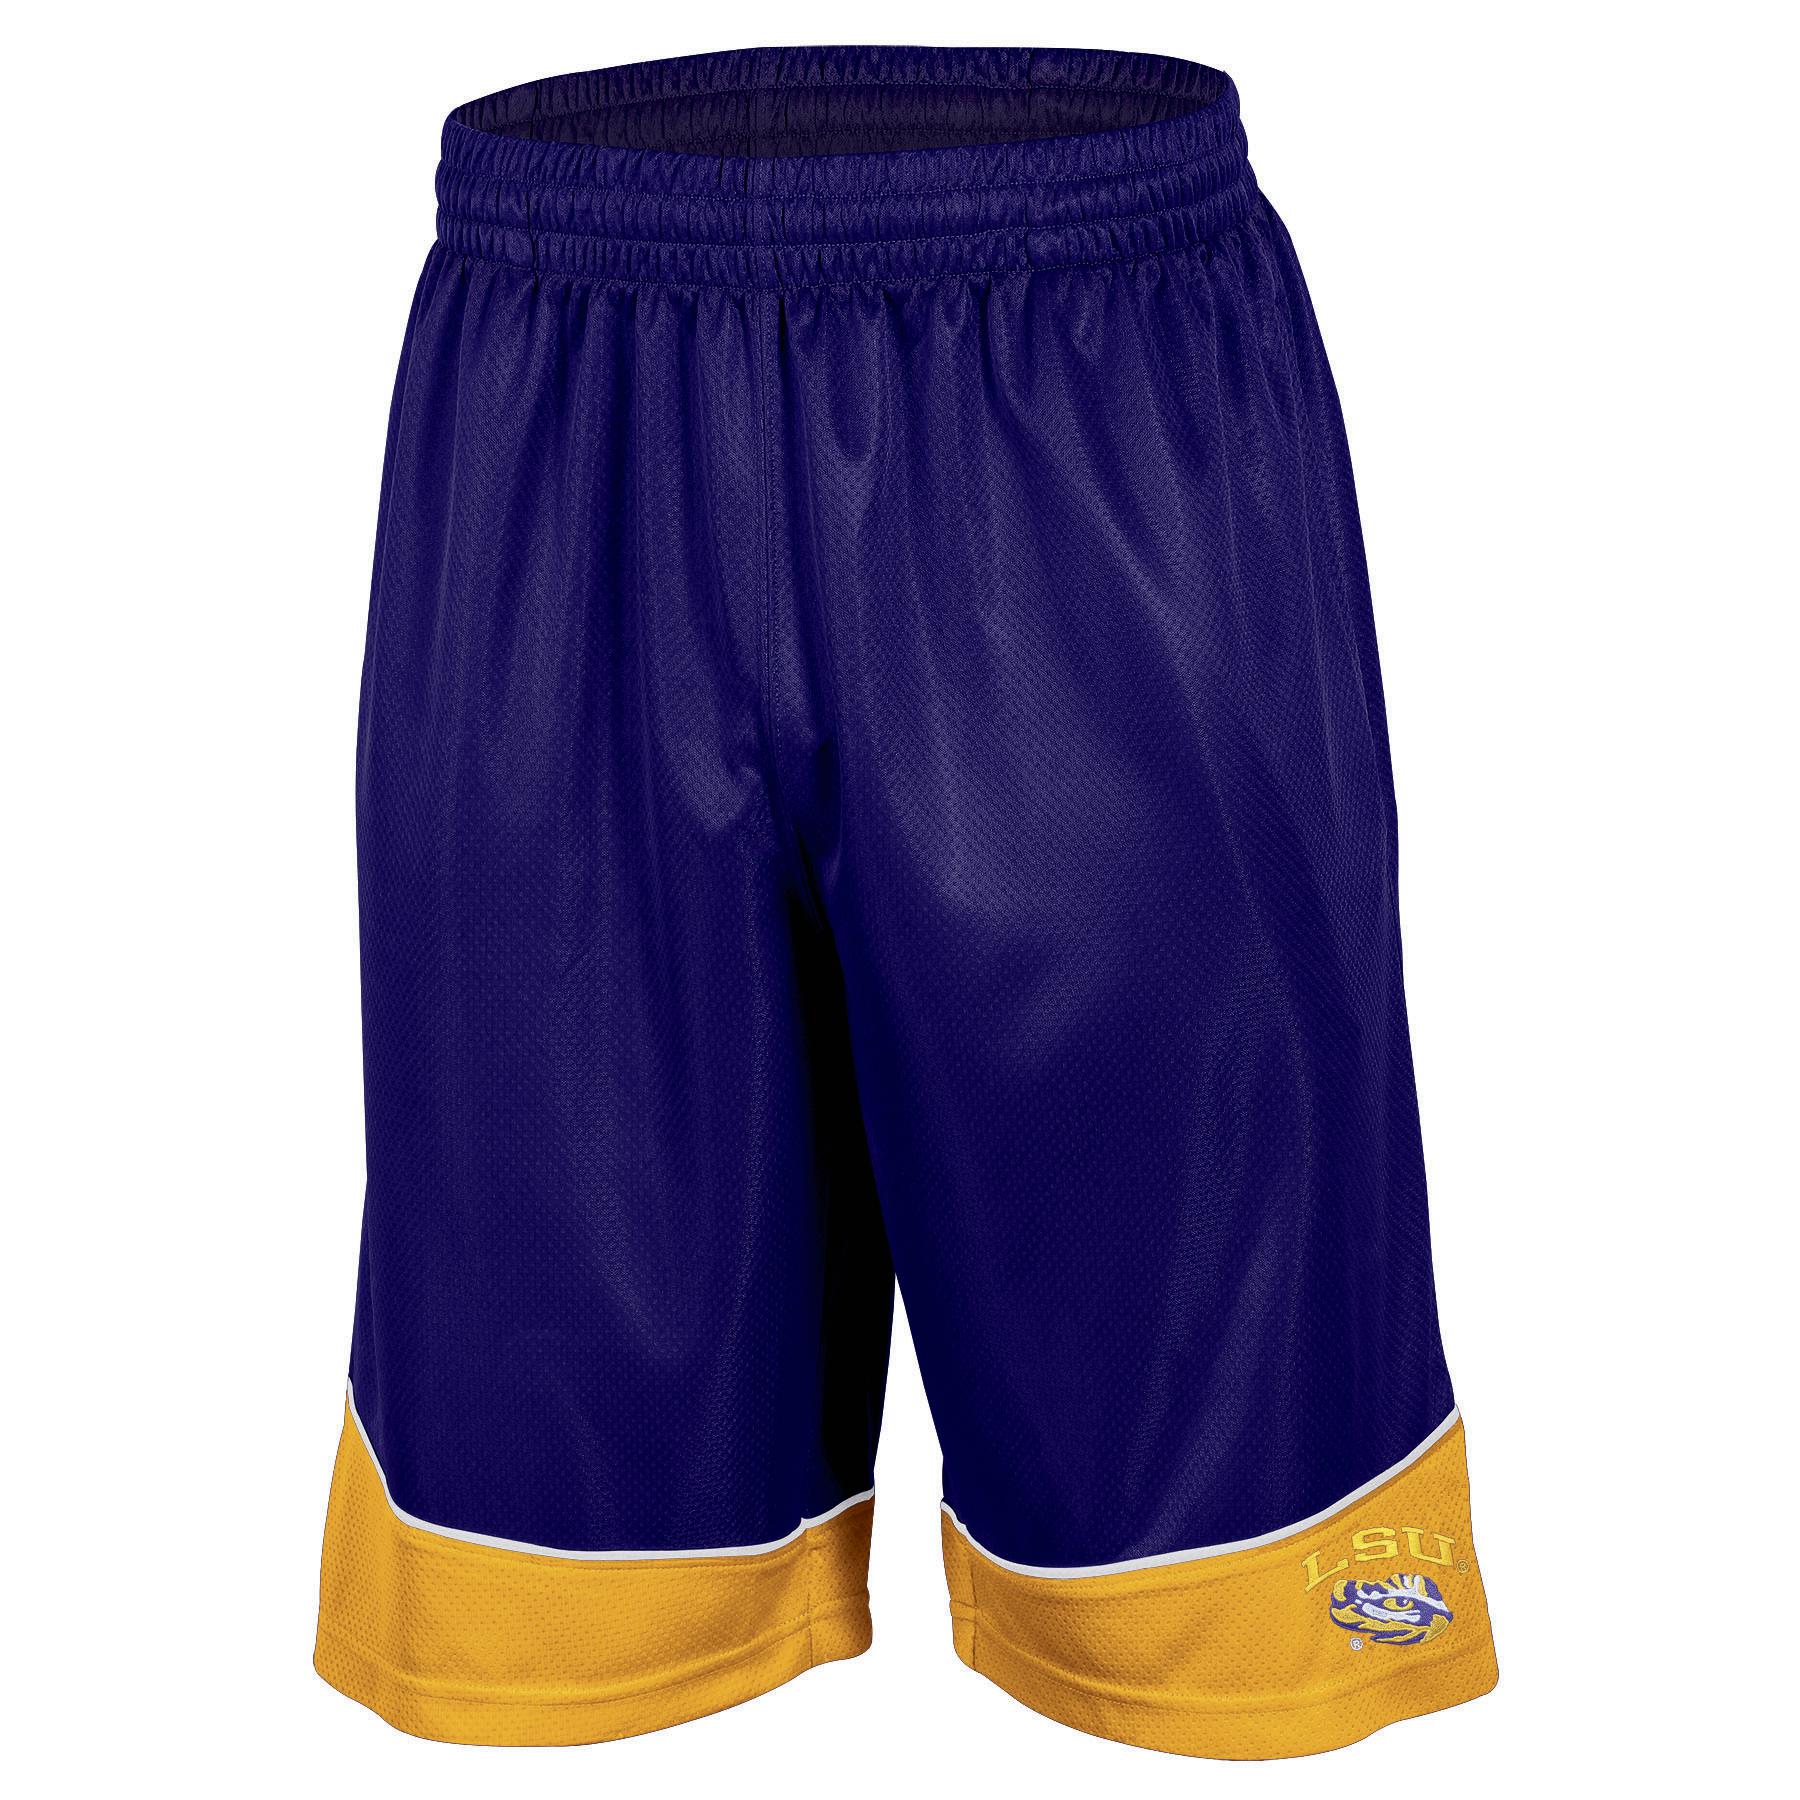 NCAA Men's Basketball Shorts - Louisiana State Tigers